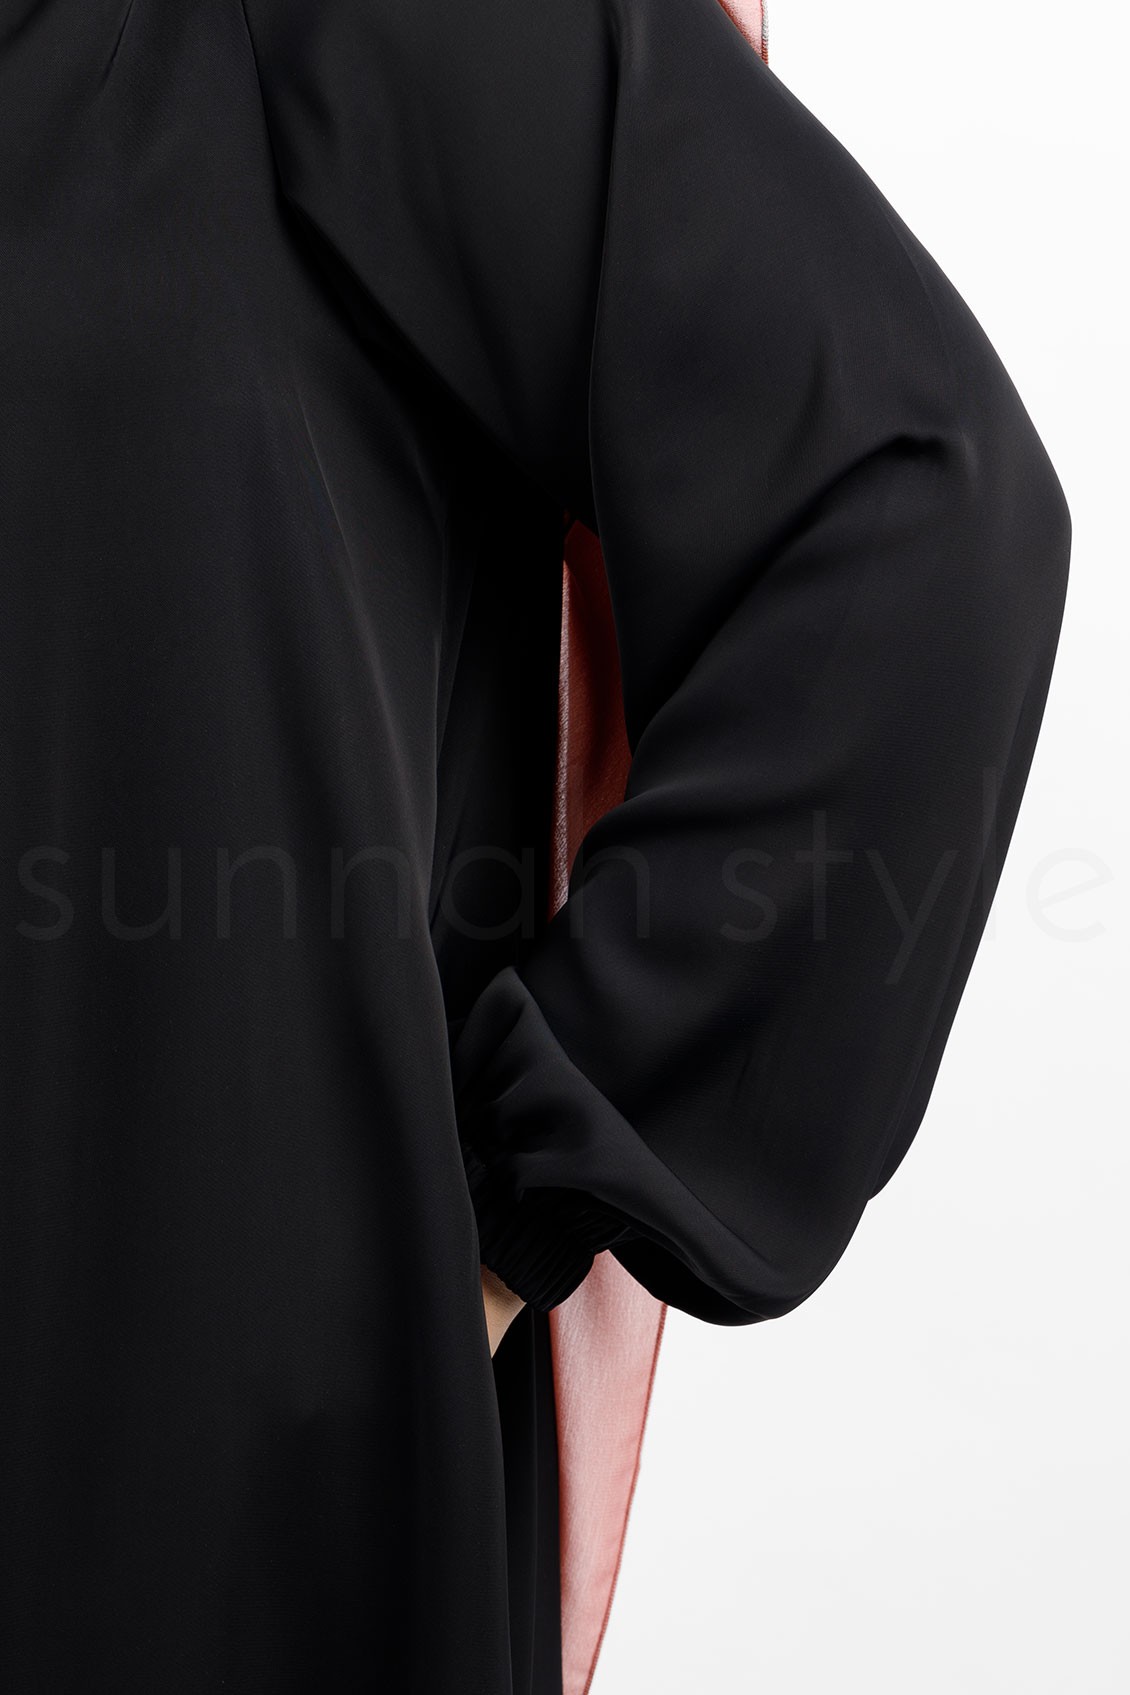 Sunnah Style Versa Stretch Cuff Abaya Black